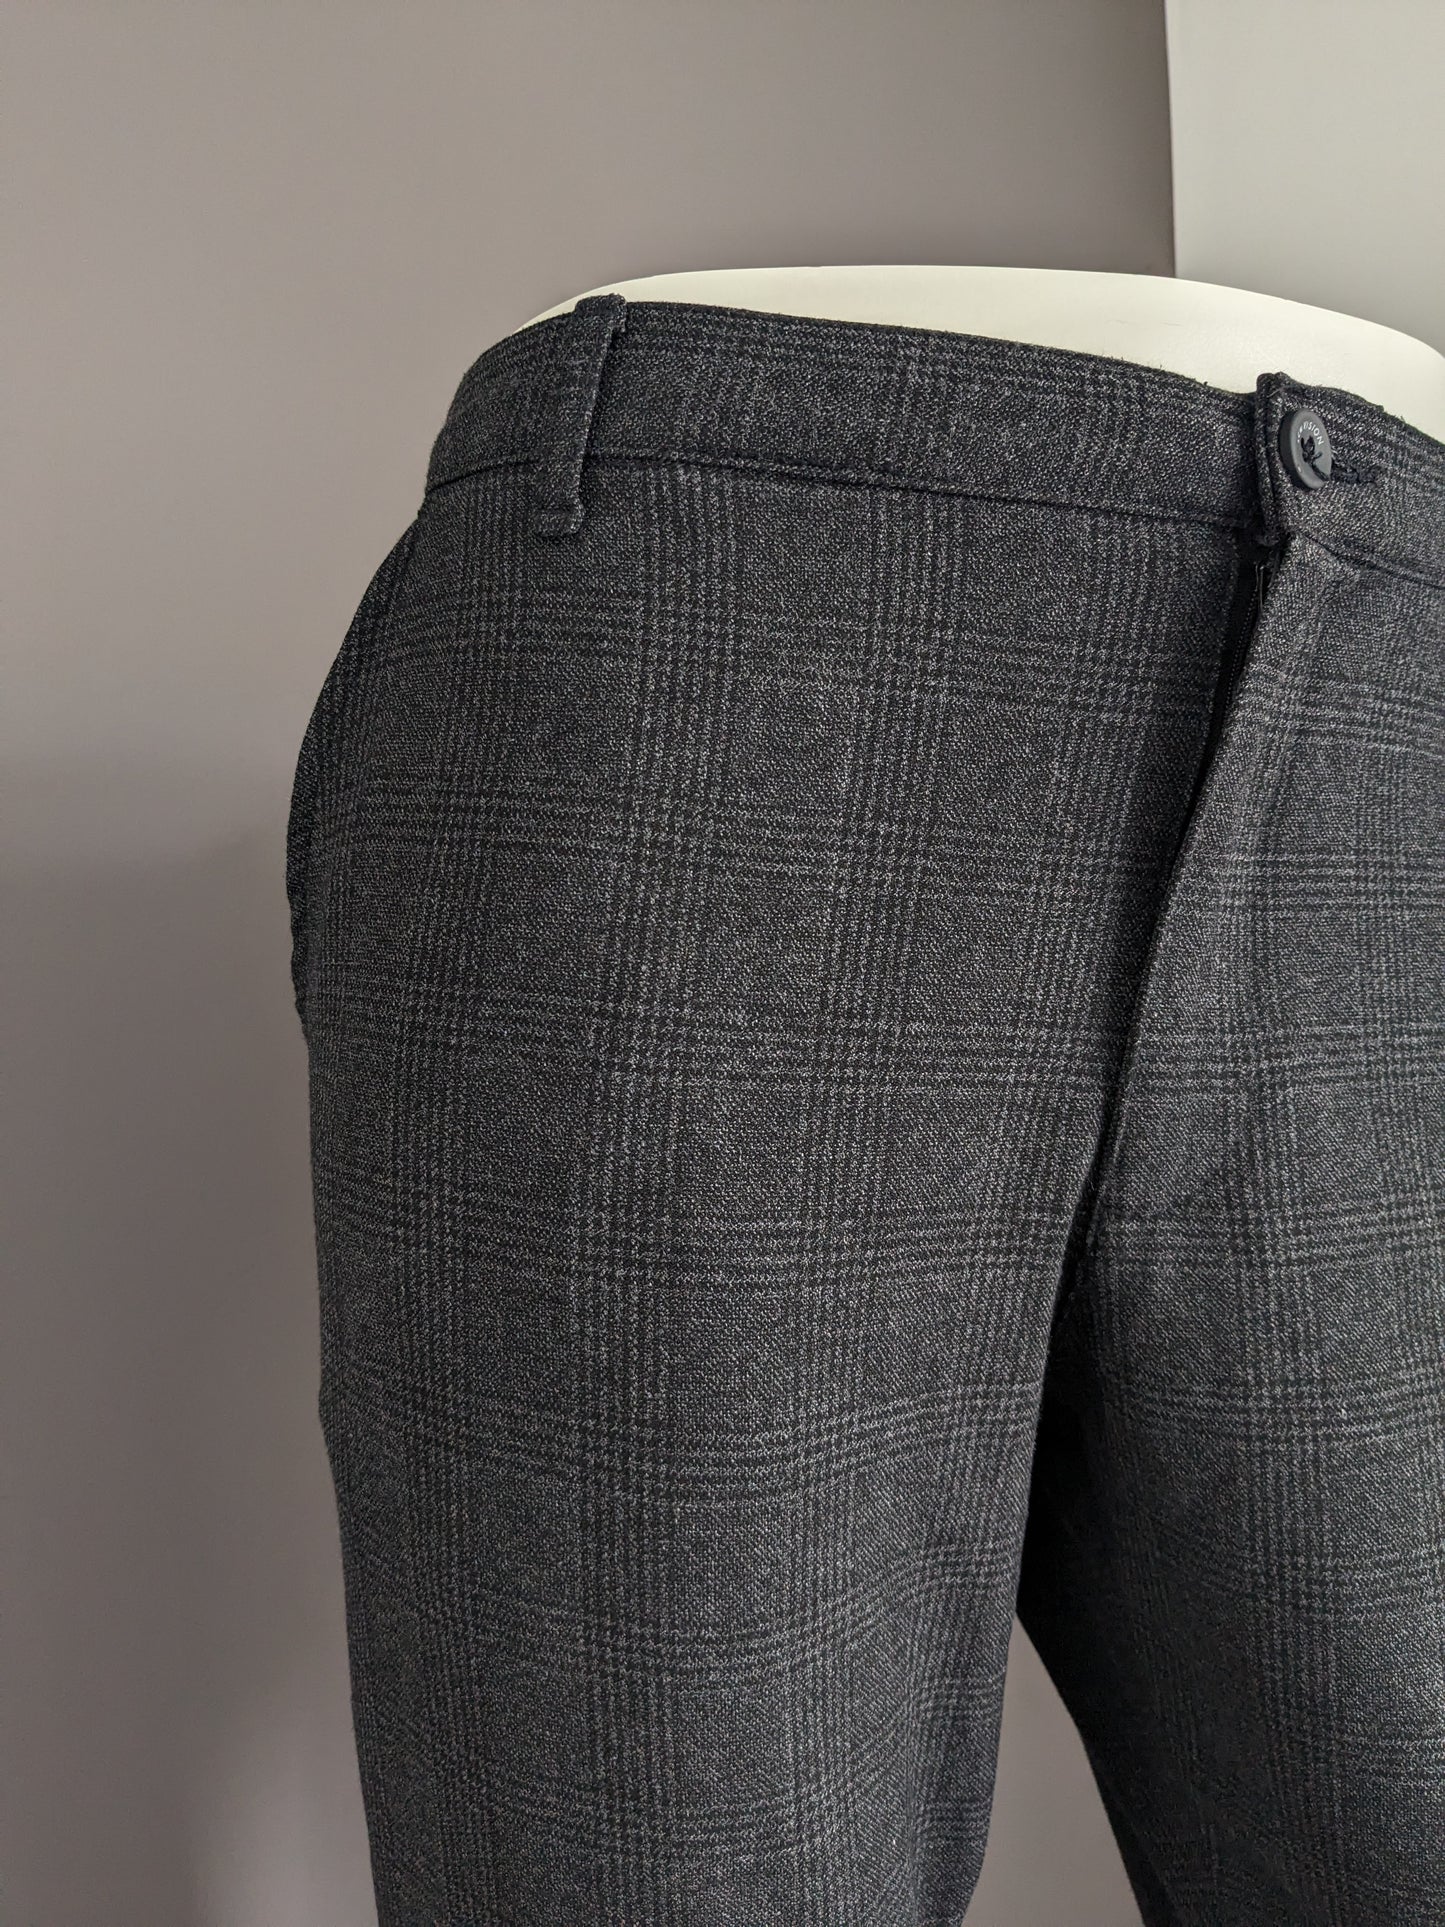 LCW Vision pantalon / broek. Grijs Zwart geruit. Cropped Slim Fit. W36 - L30.